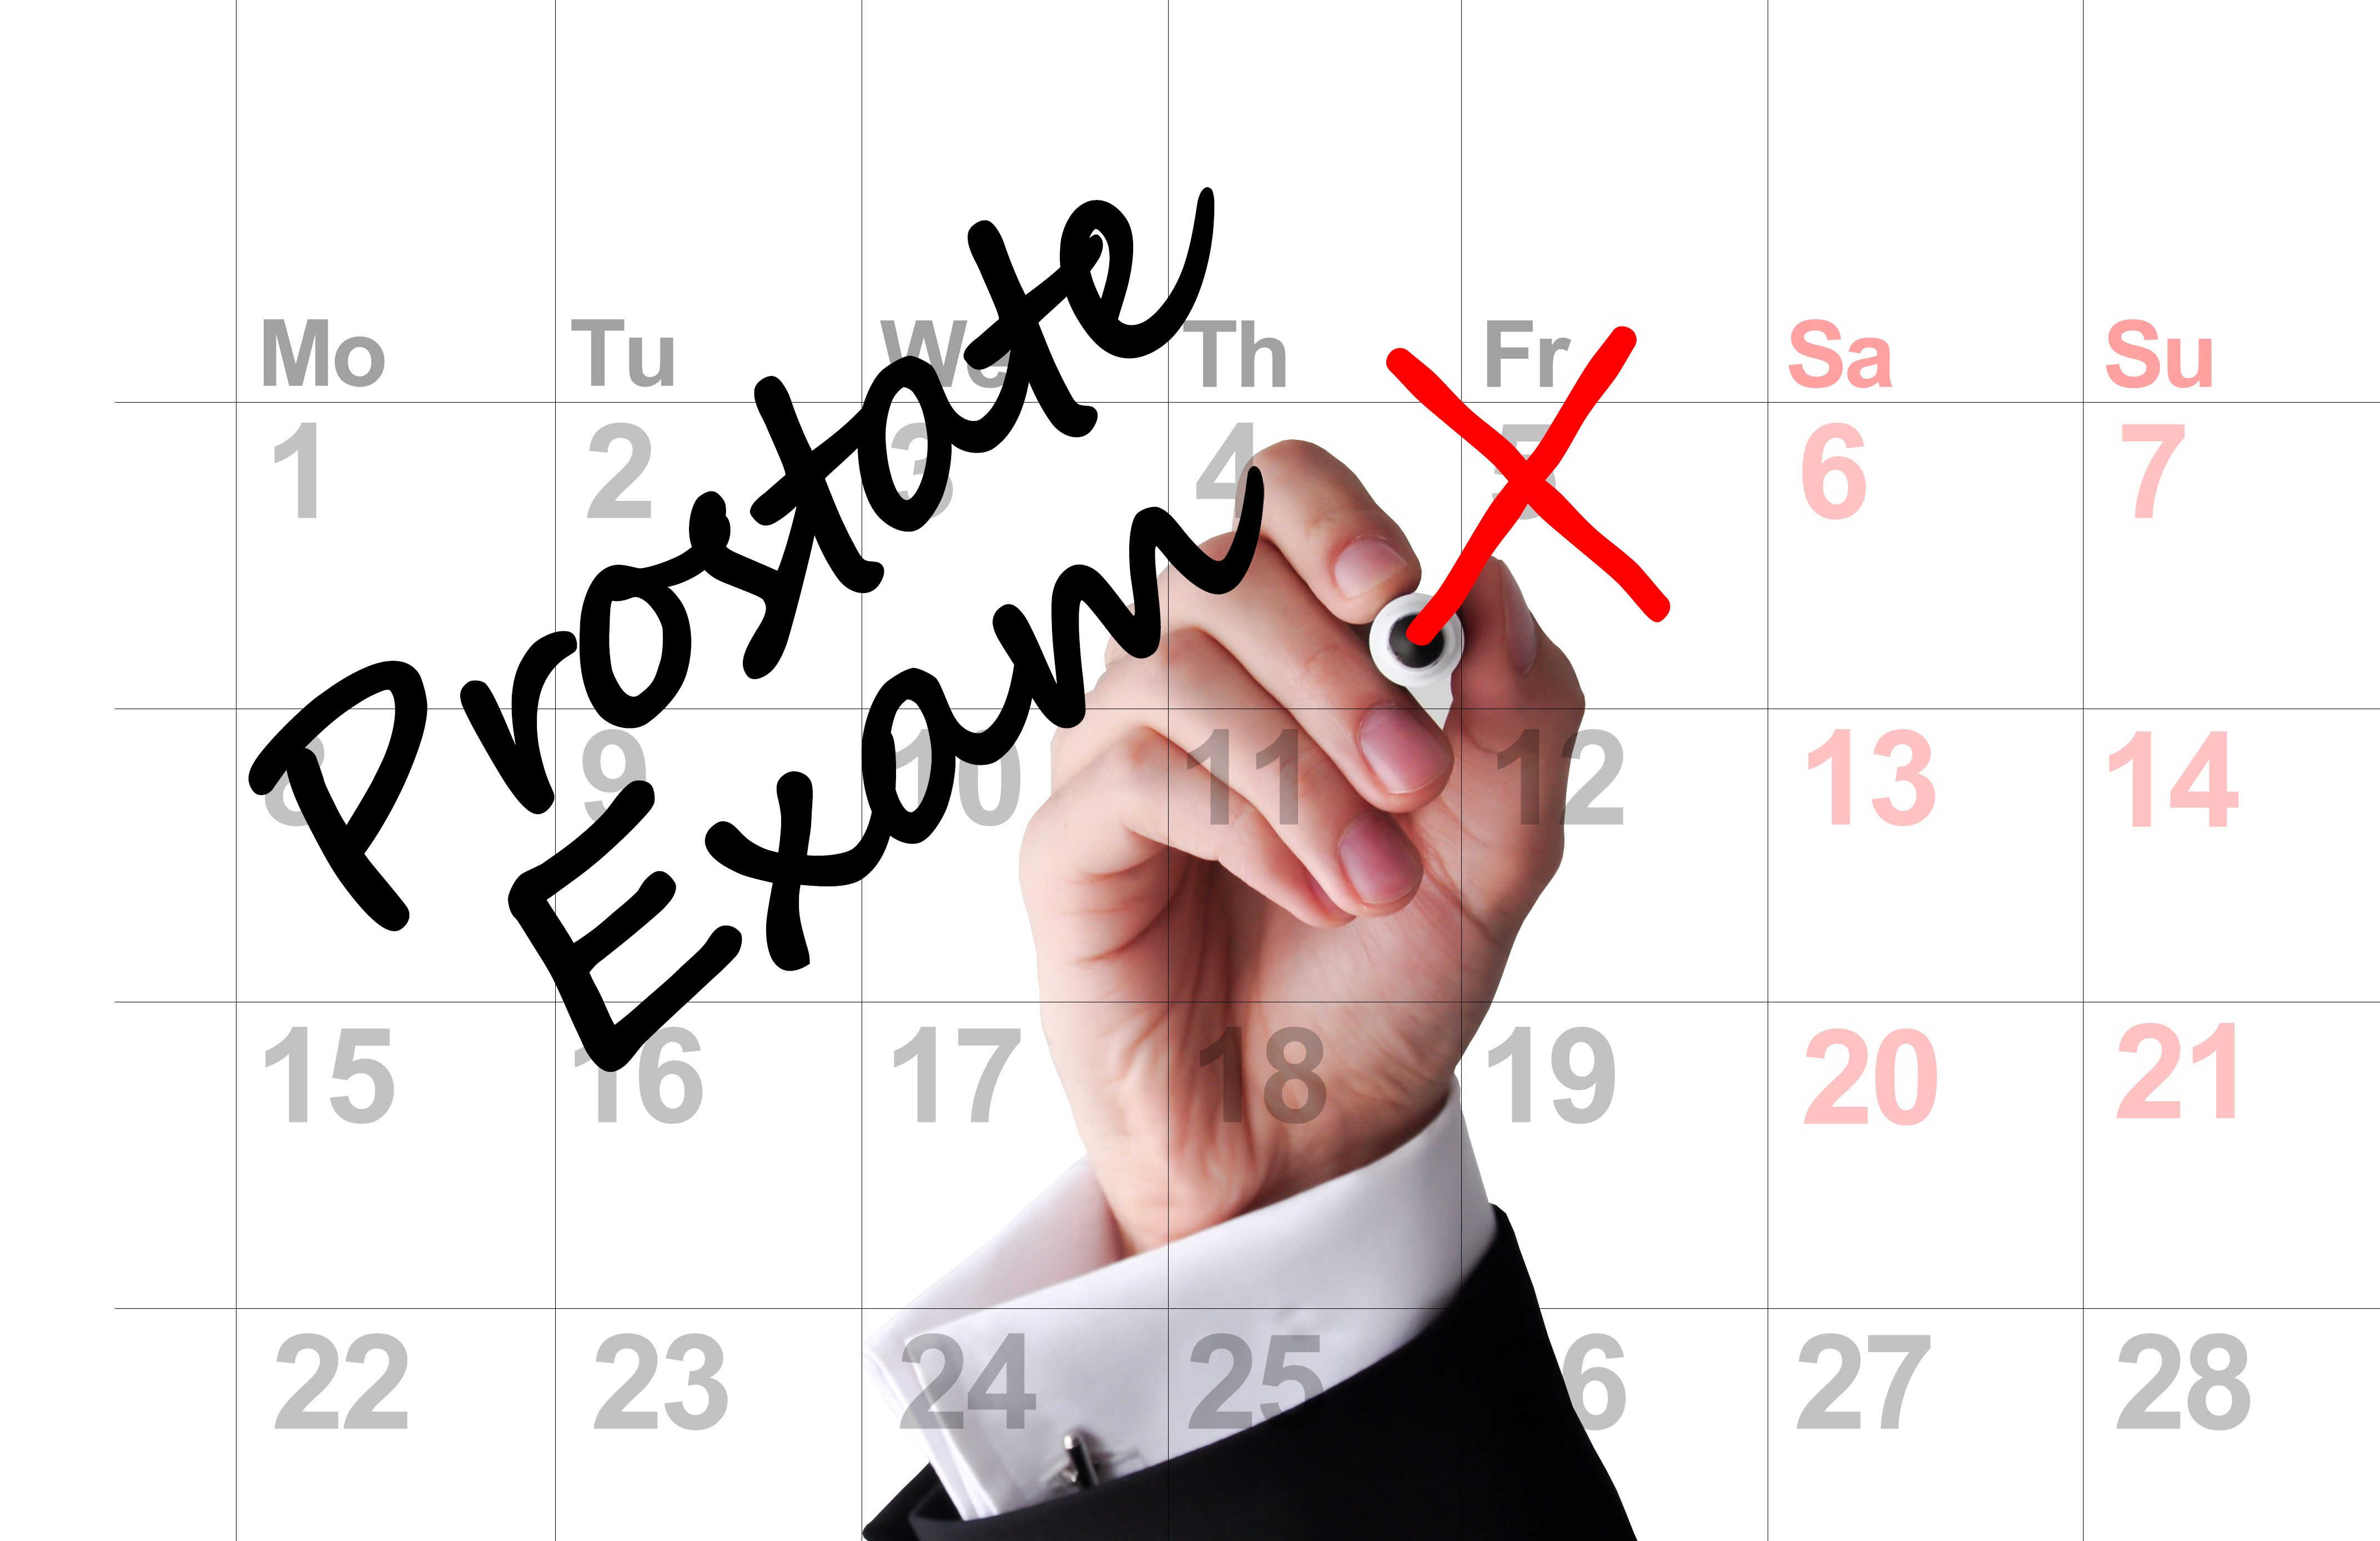 Prostate exam date market on calendar